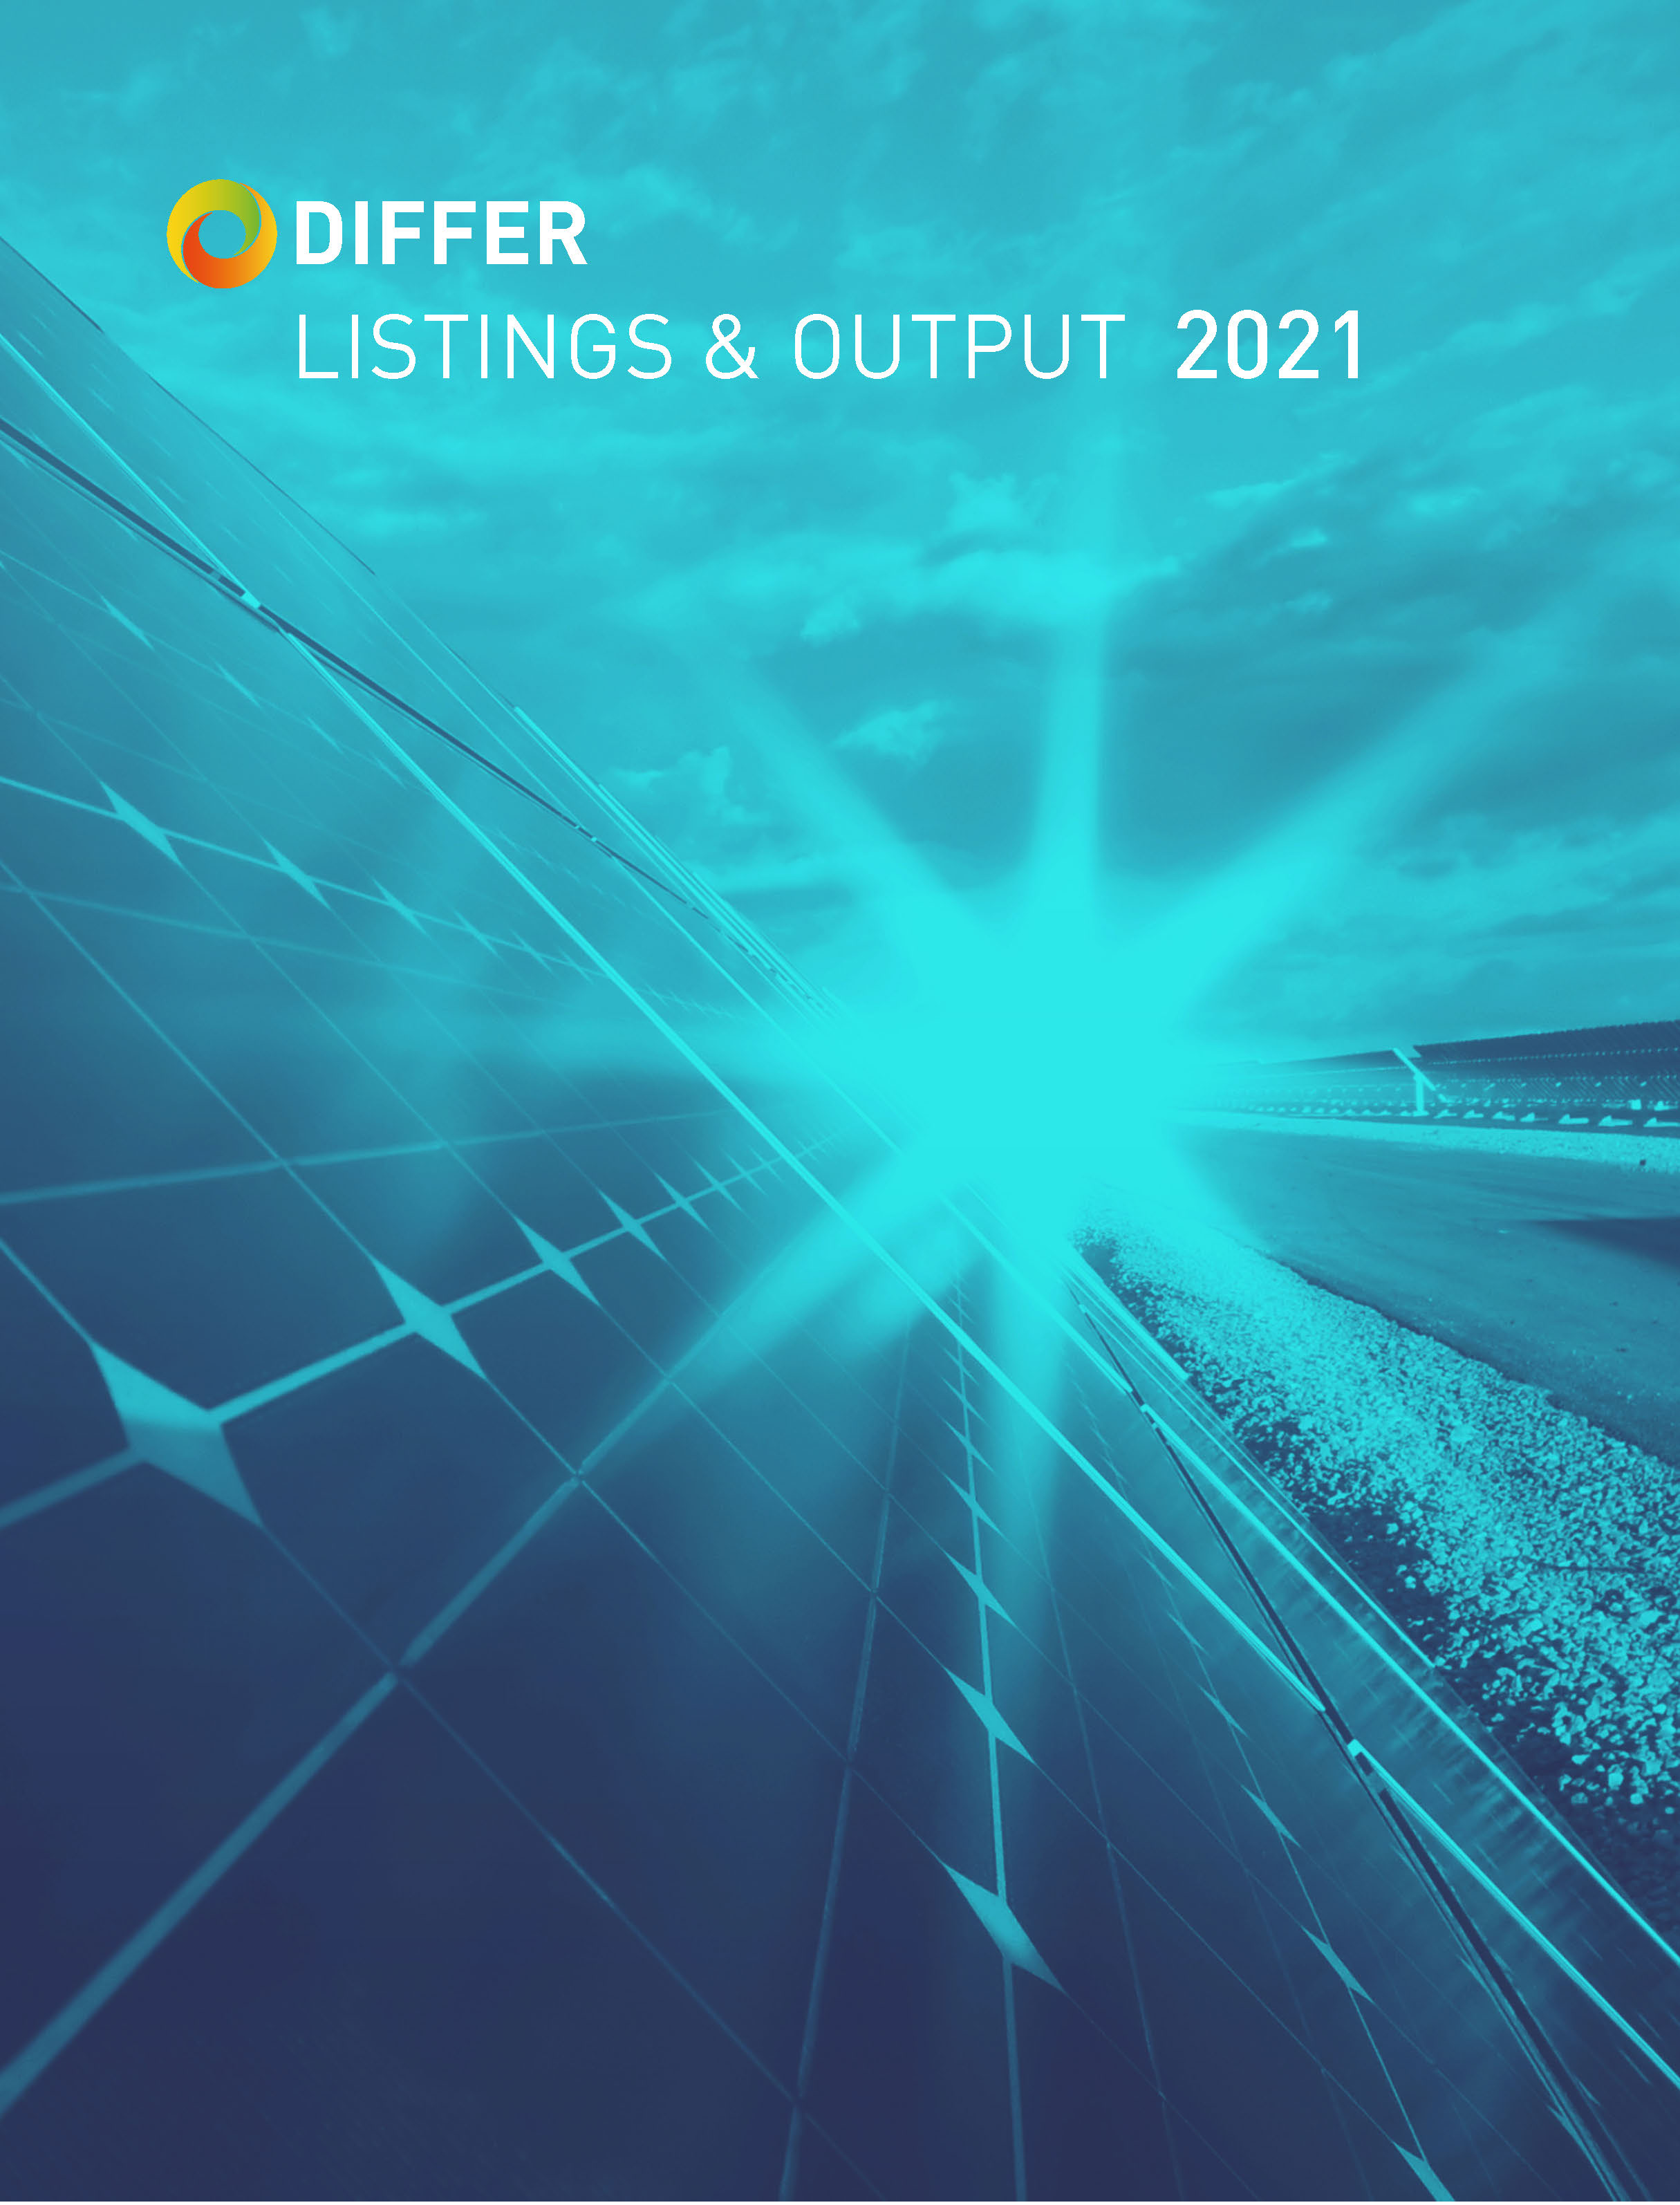 Cover Annual Report 2021